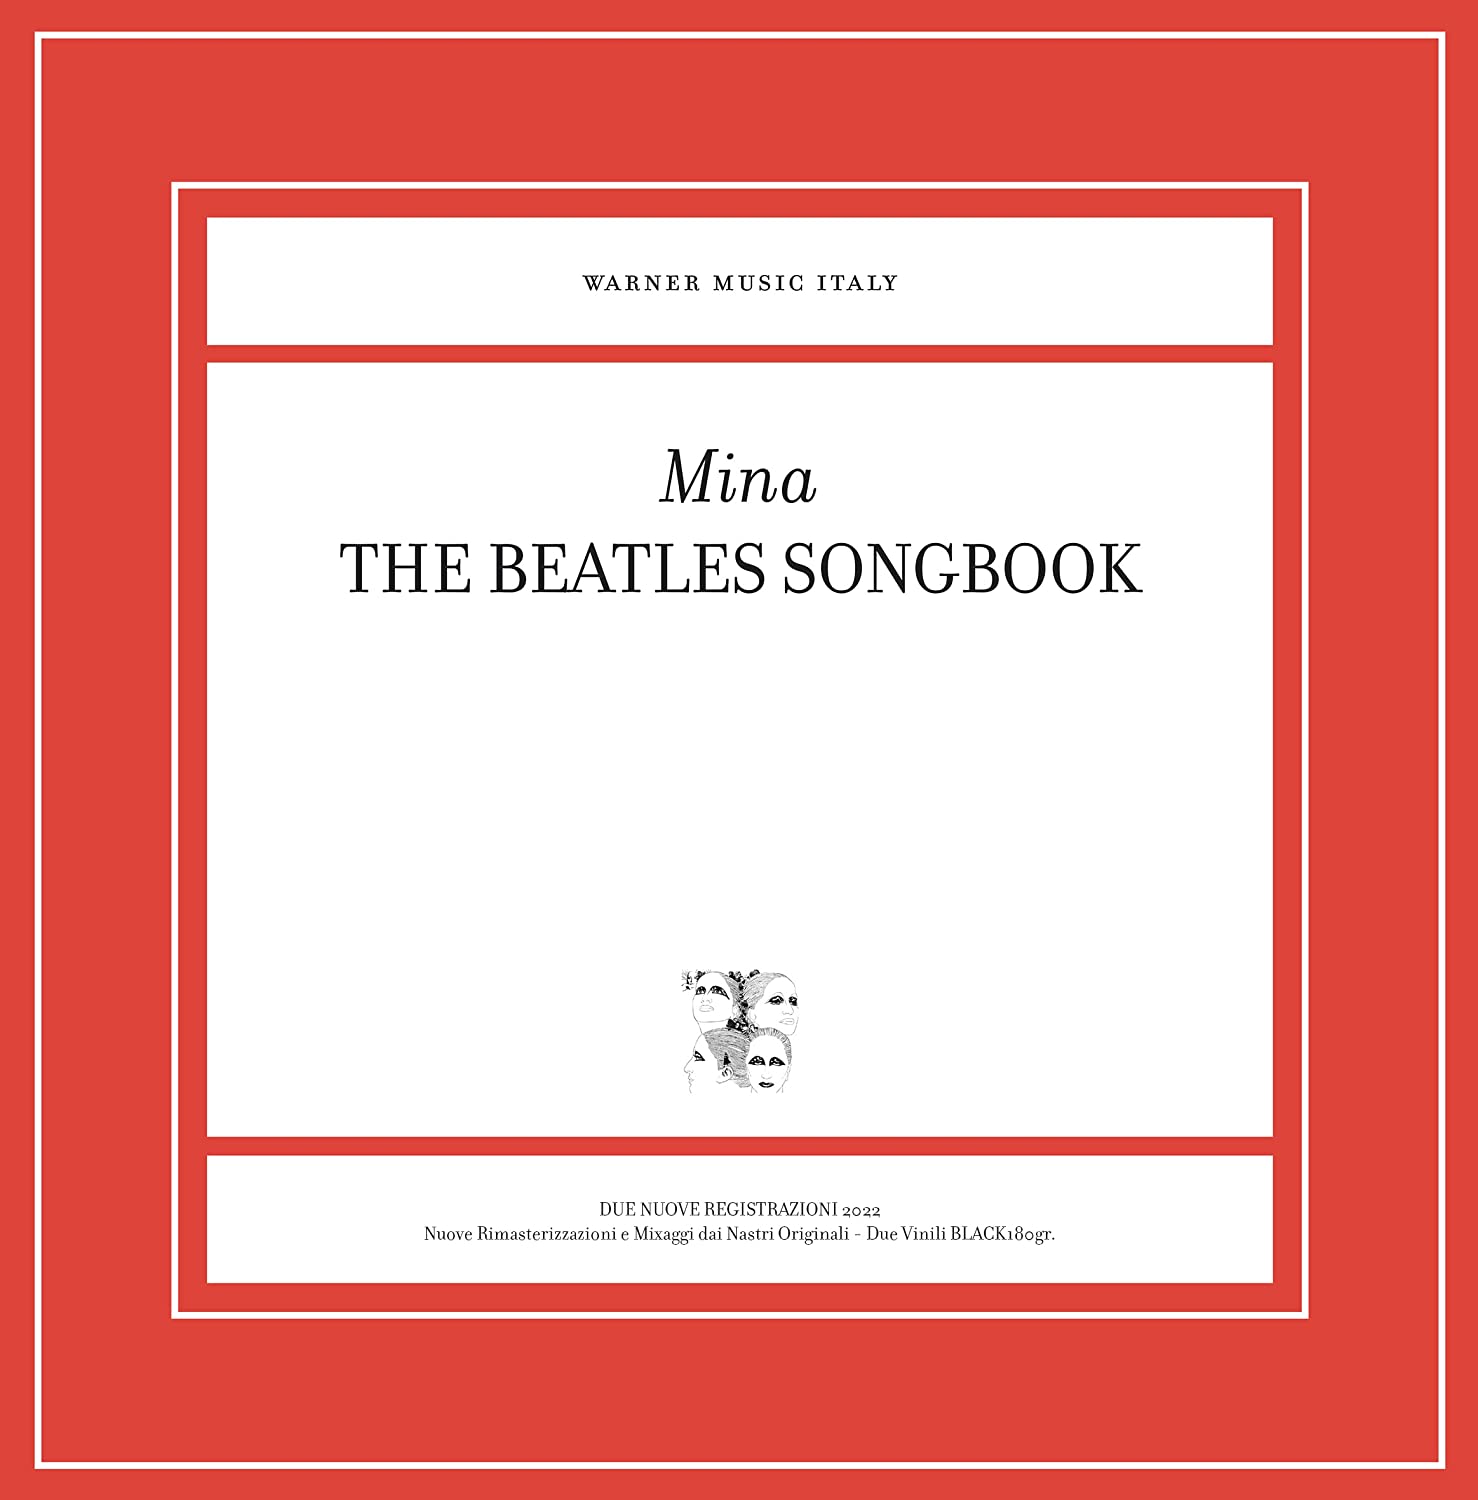 Copertina Vinile 33 giri The Beatles Songbook di Mina